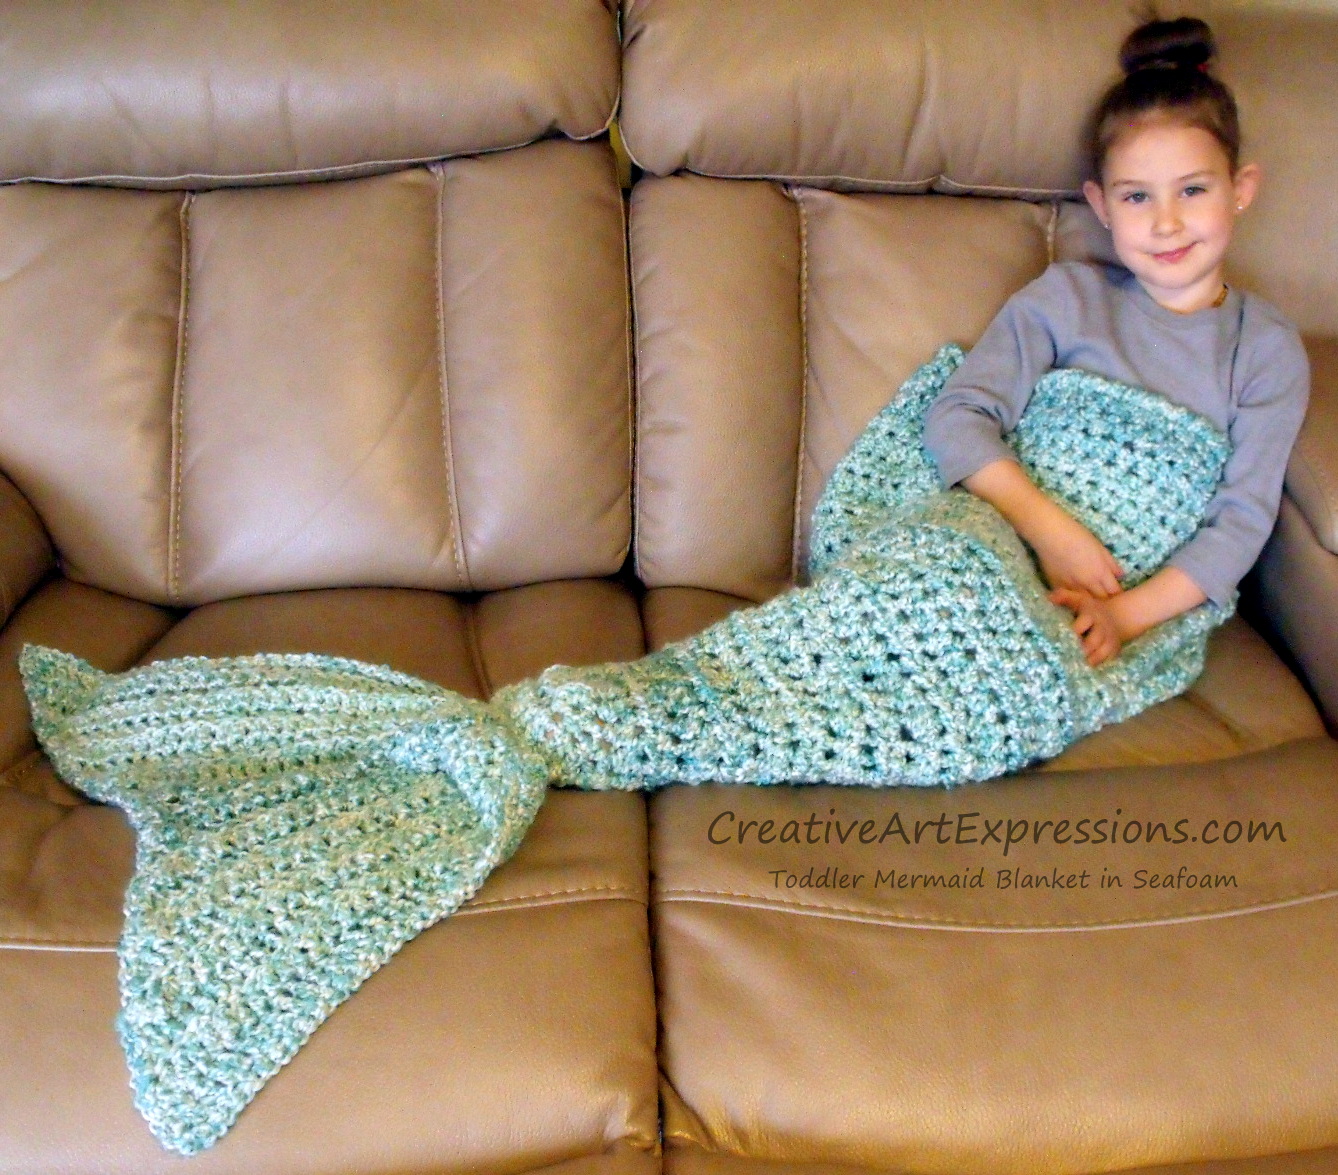 Creative Art Expressions Hand Crocheted Toddler Mermaid Blanket in Seafoam